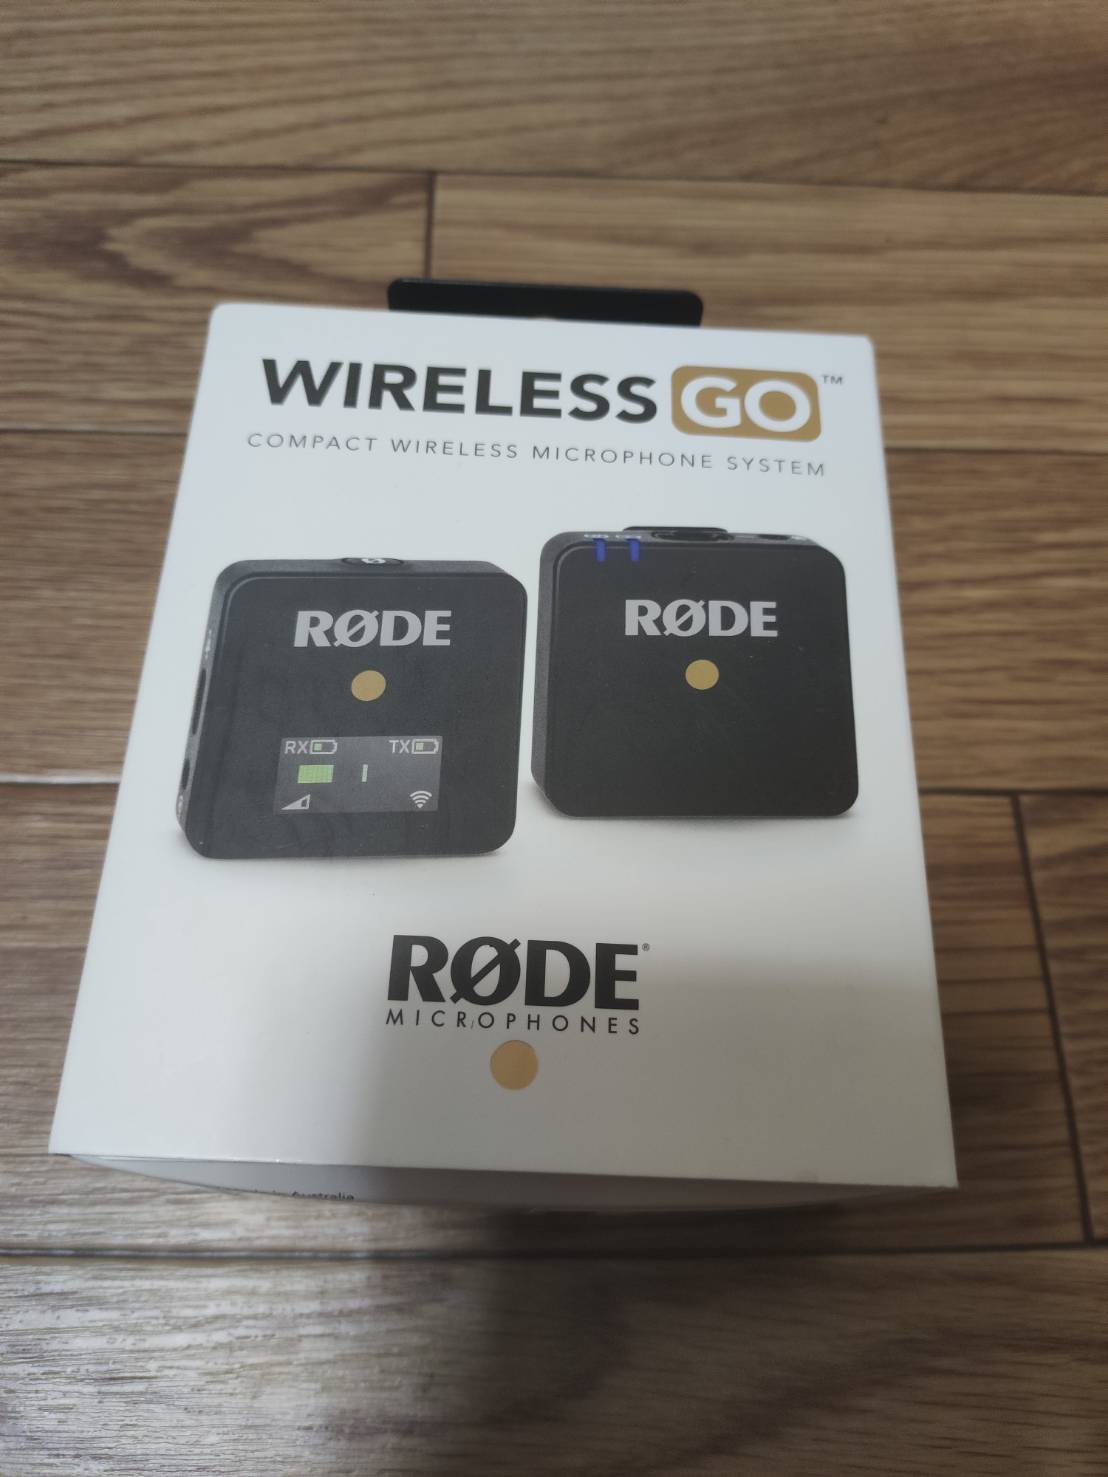 RODE Wireless Goレビュー！音質良好でおすすめワイヤレスマイク 